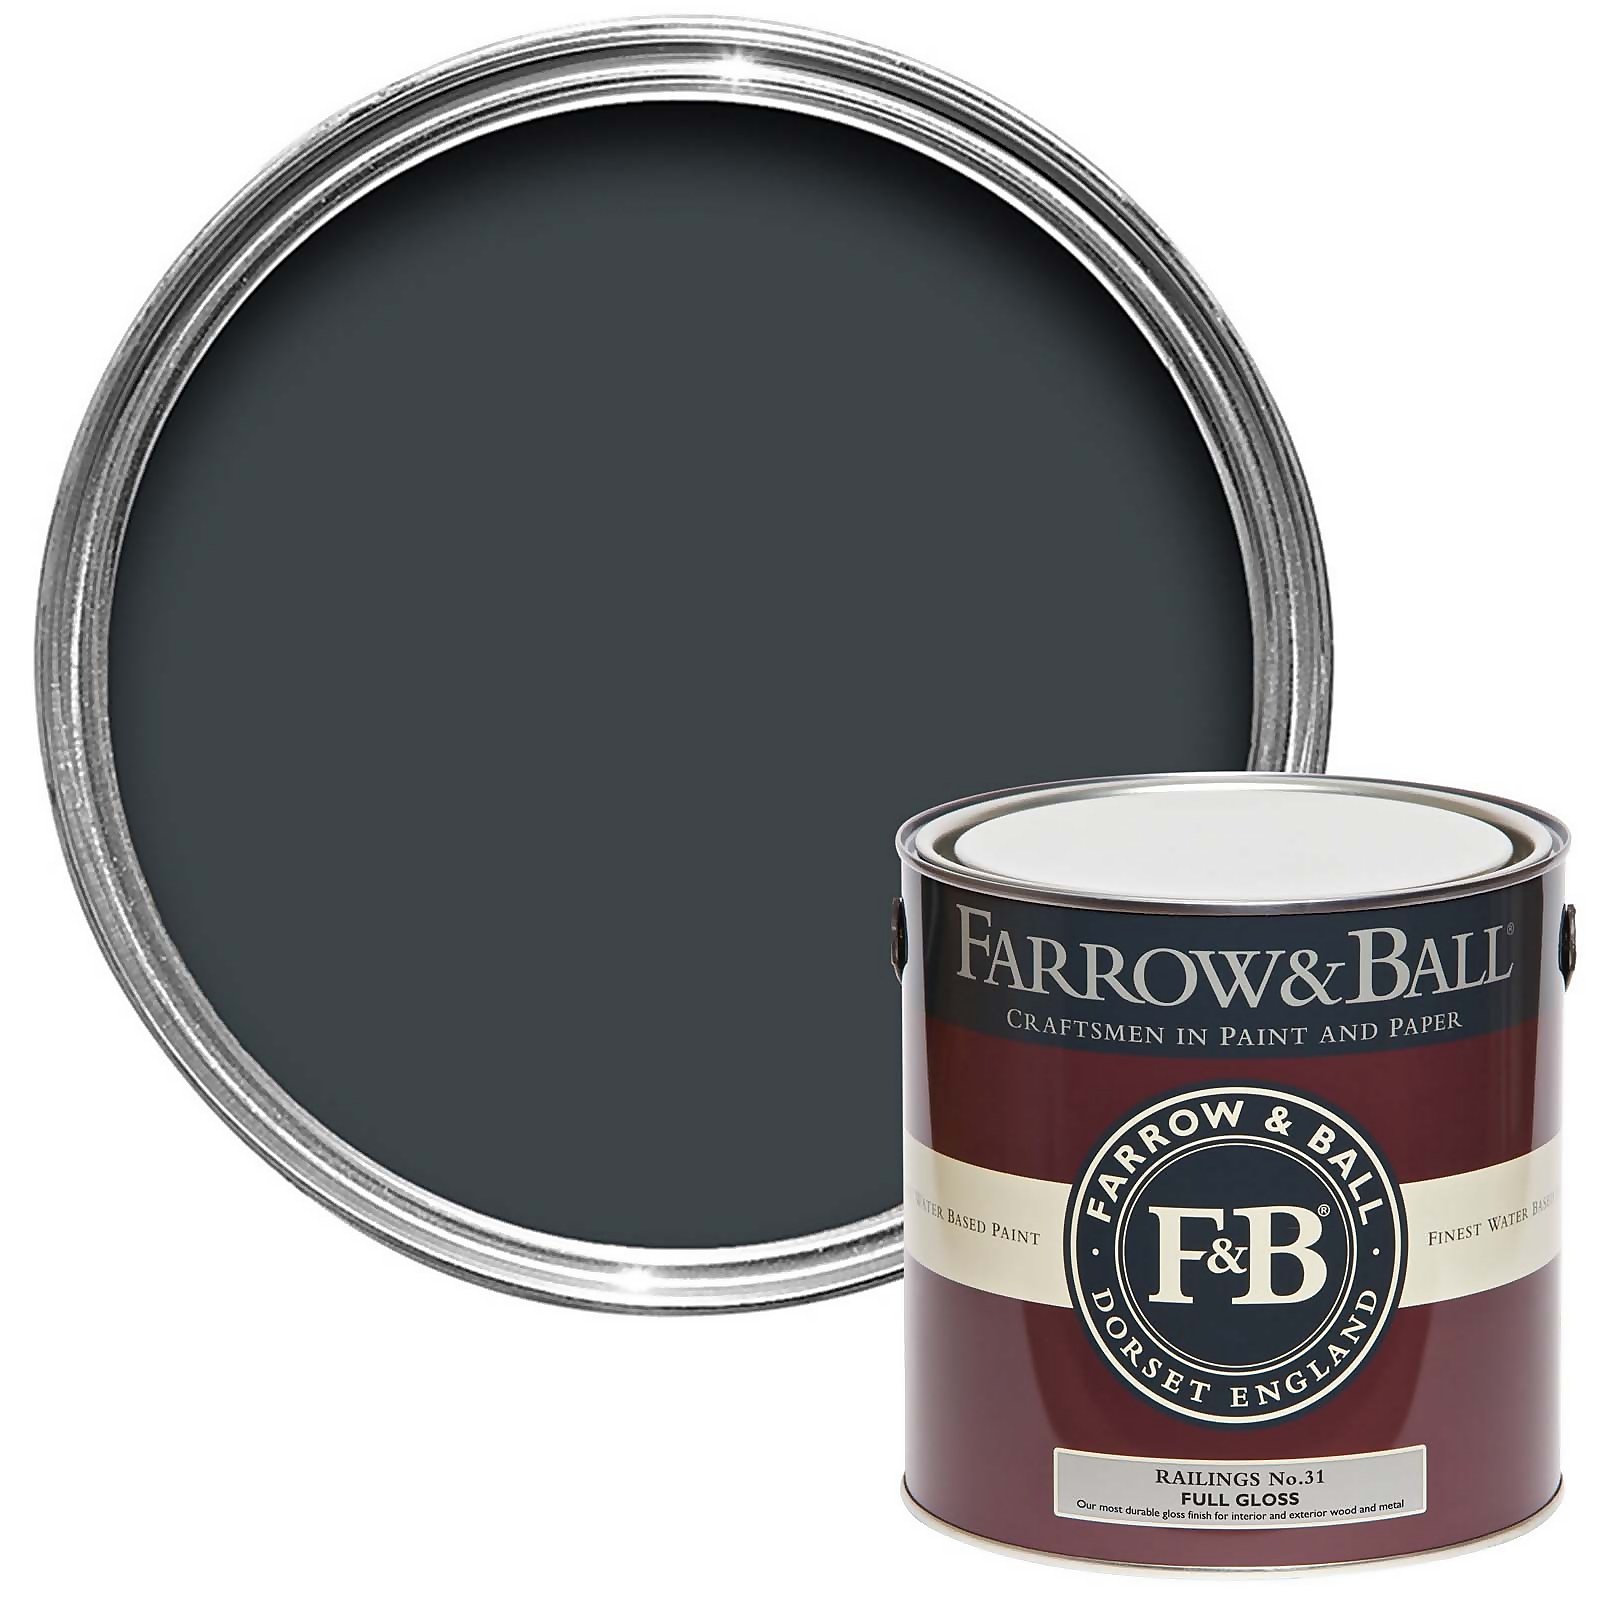 Farrow & Ball Full Gloss Paint Railings No.31 - 2.5L